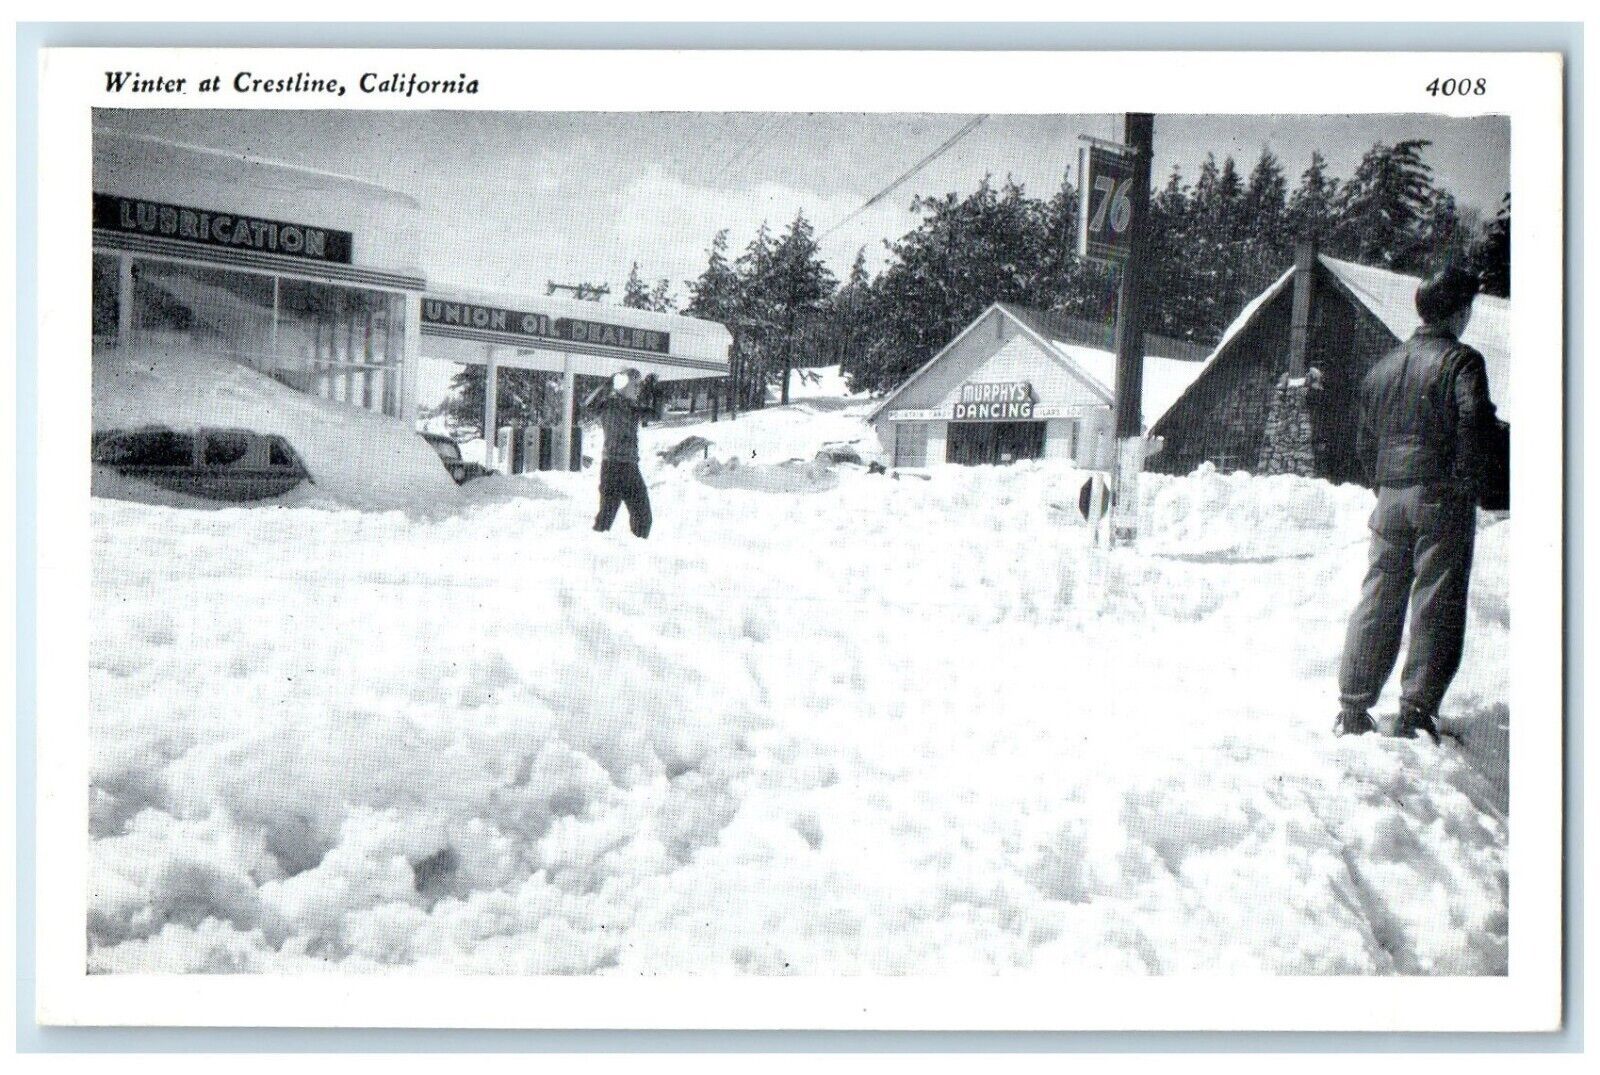 Winter At Crestline California CA, Union Oil Dealer Murphy\'s Dancing Postcard